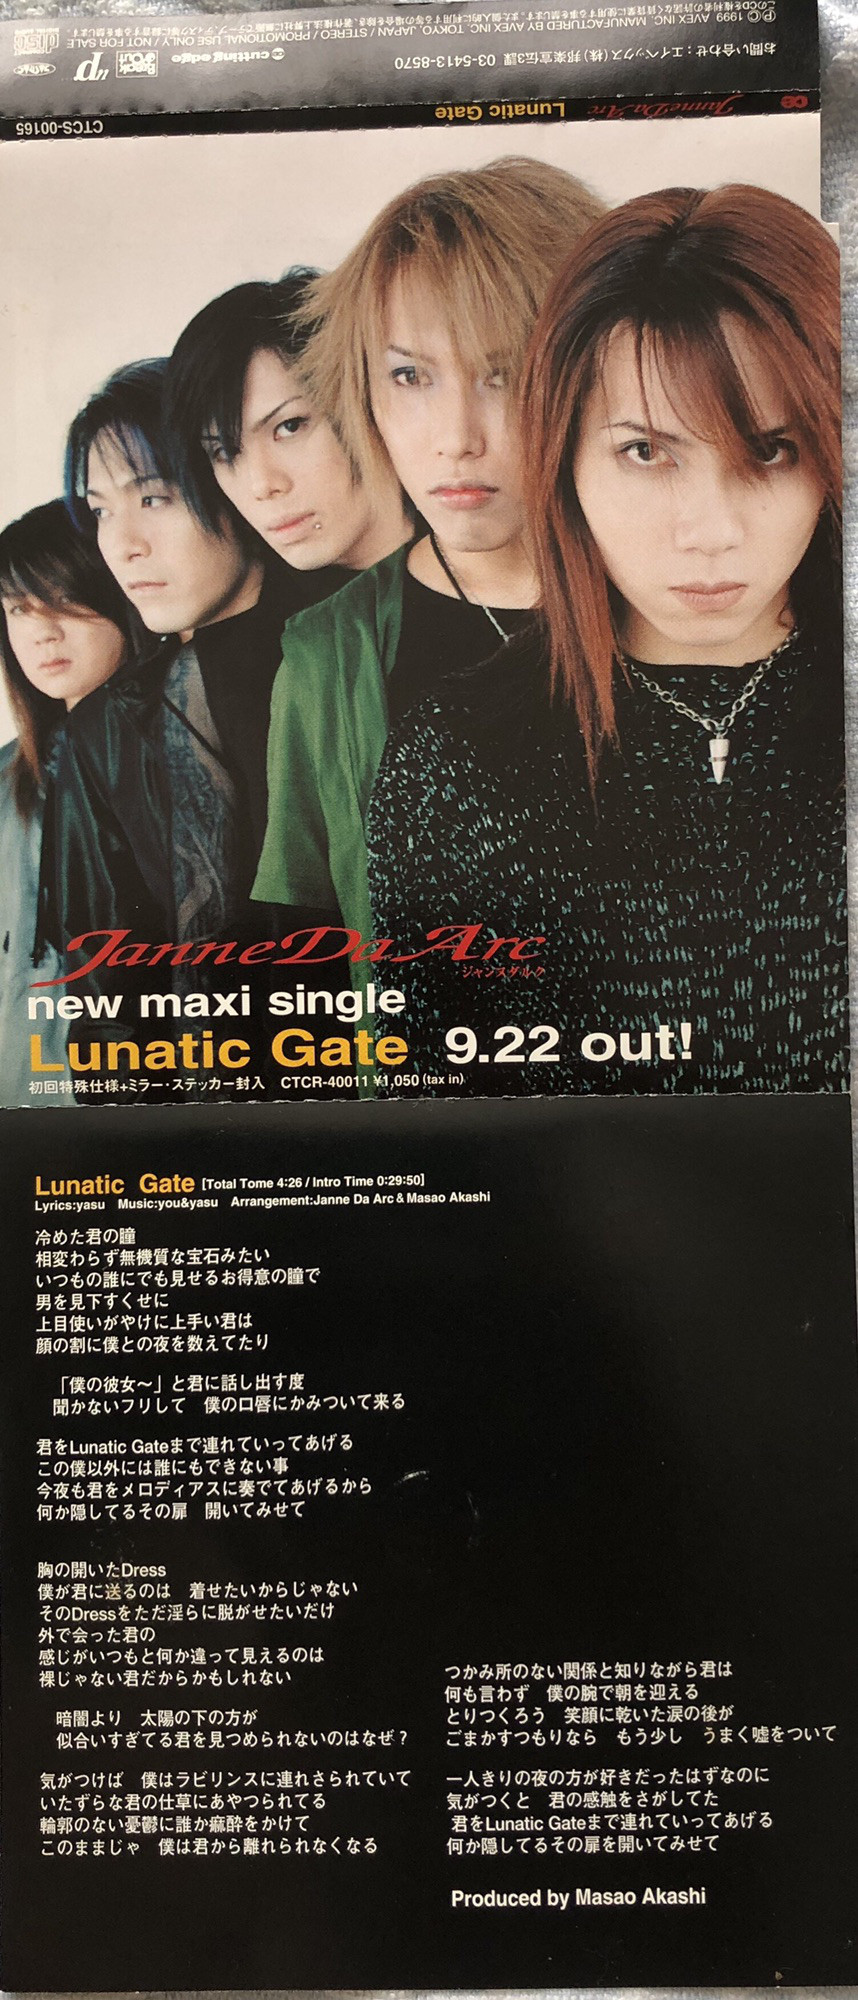 2nd Single Lunatic Gate Janne Da Arc Discography Legend Of Dreamers 終わらない永遠の星座